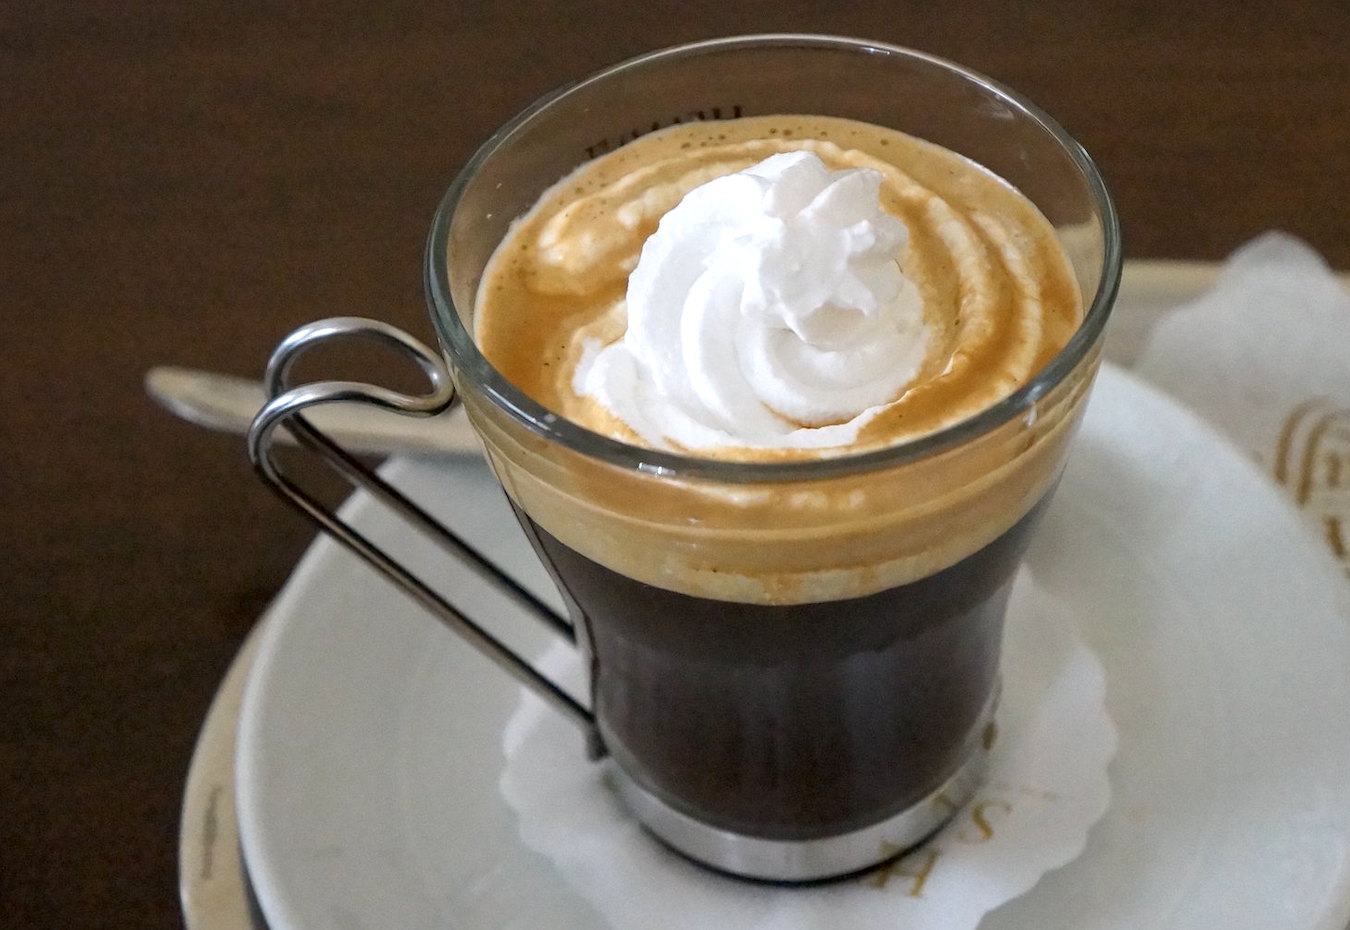 Biedermeier Coffee - A Lovely and Sweet Coffee